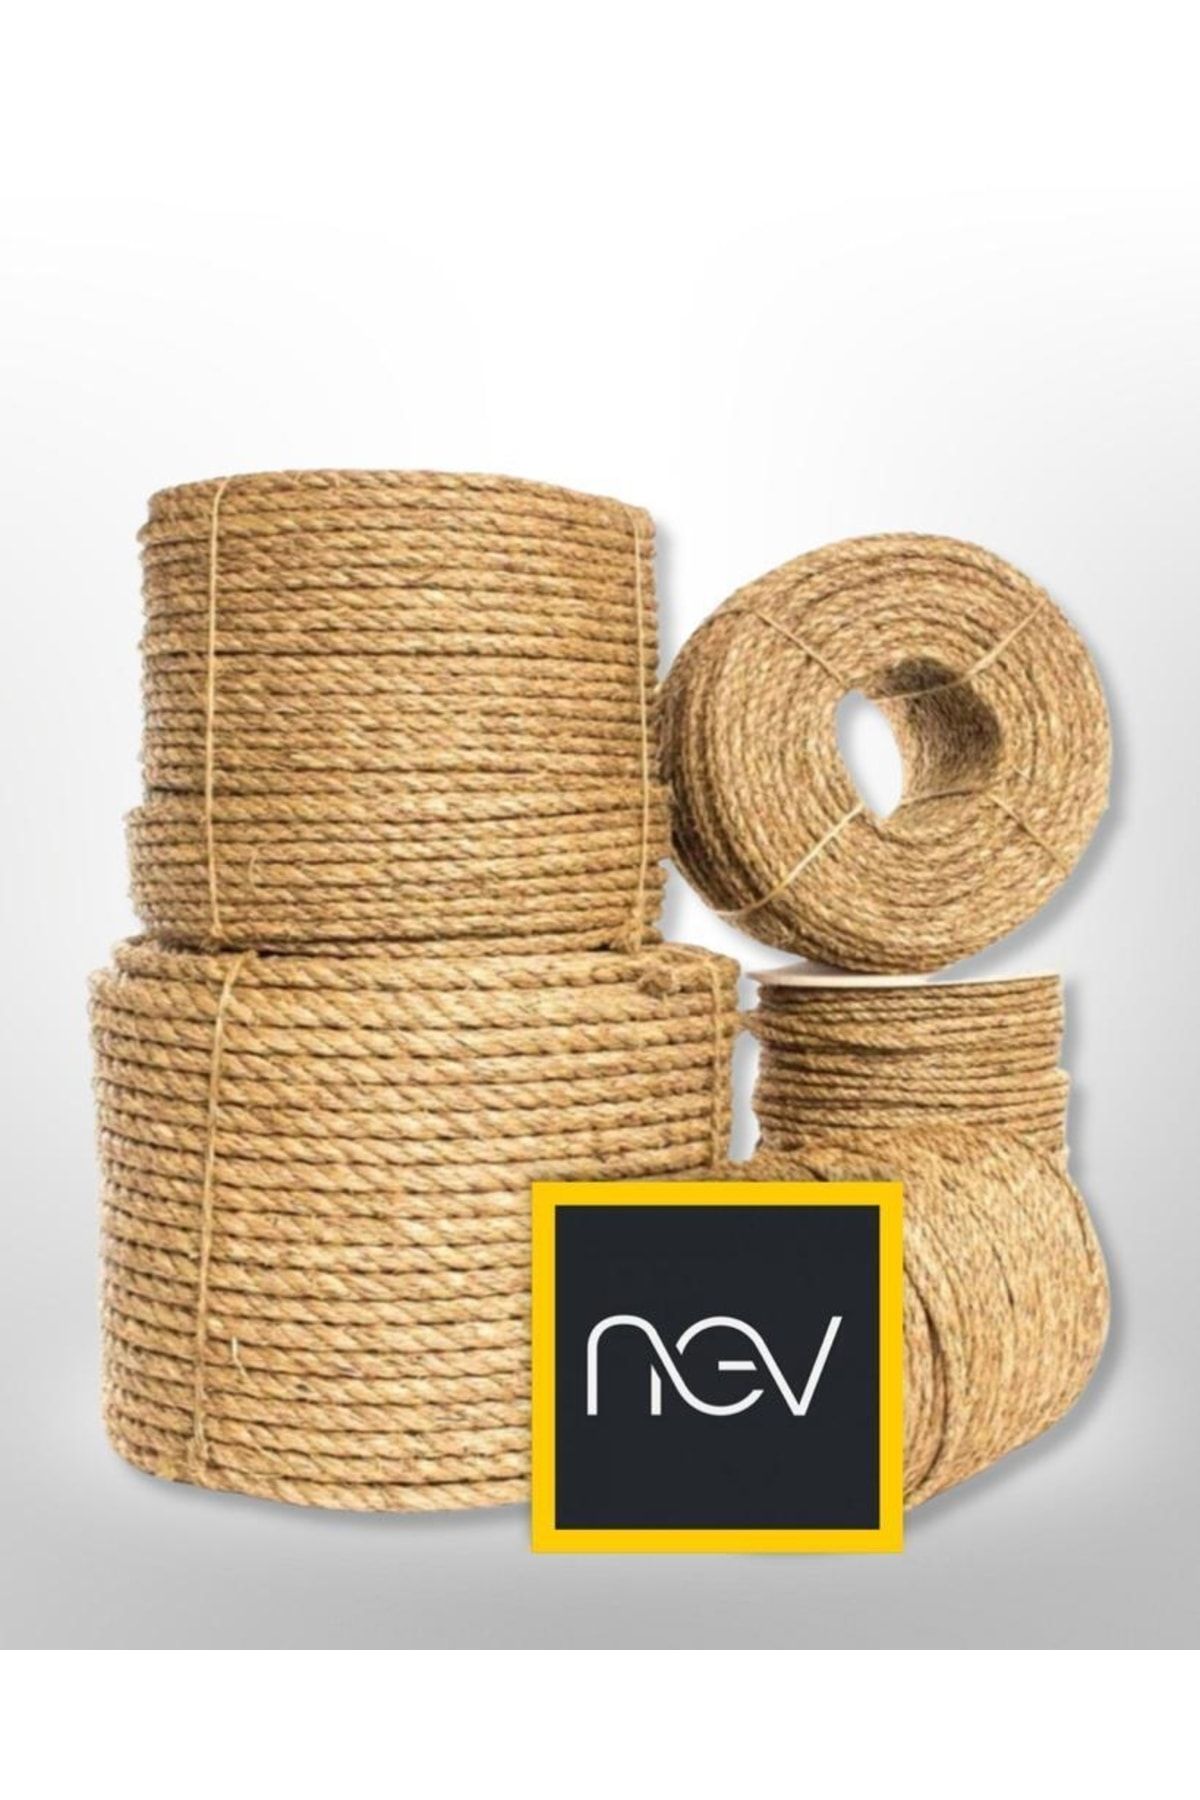 Nev Straw Rope 4 Mm 50m (Jute Rope Hemp Natural Rope) - Trendyol